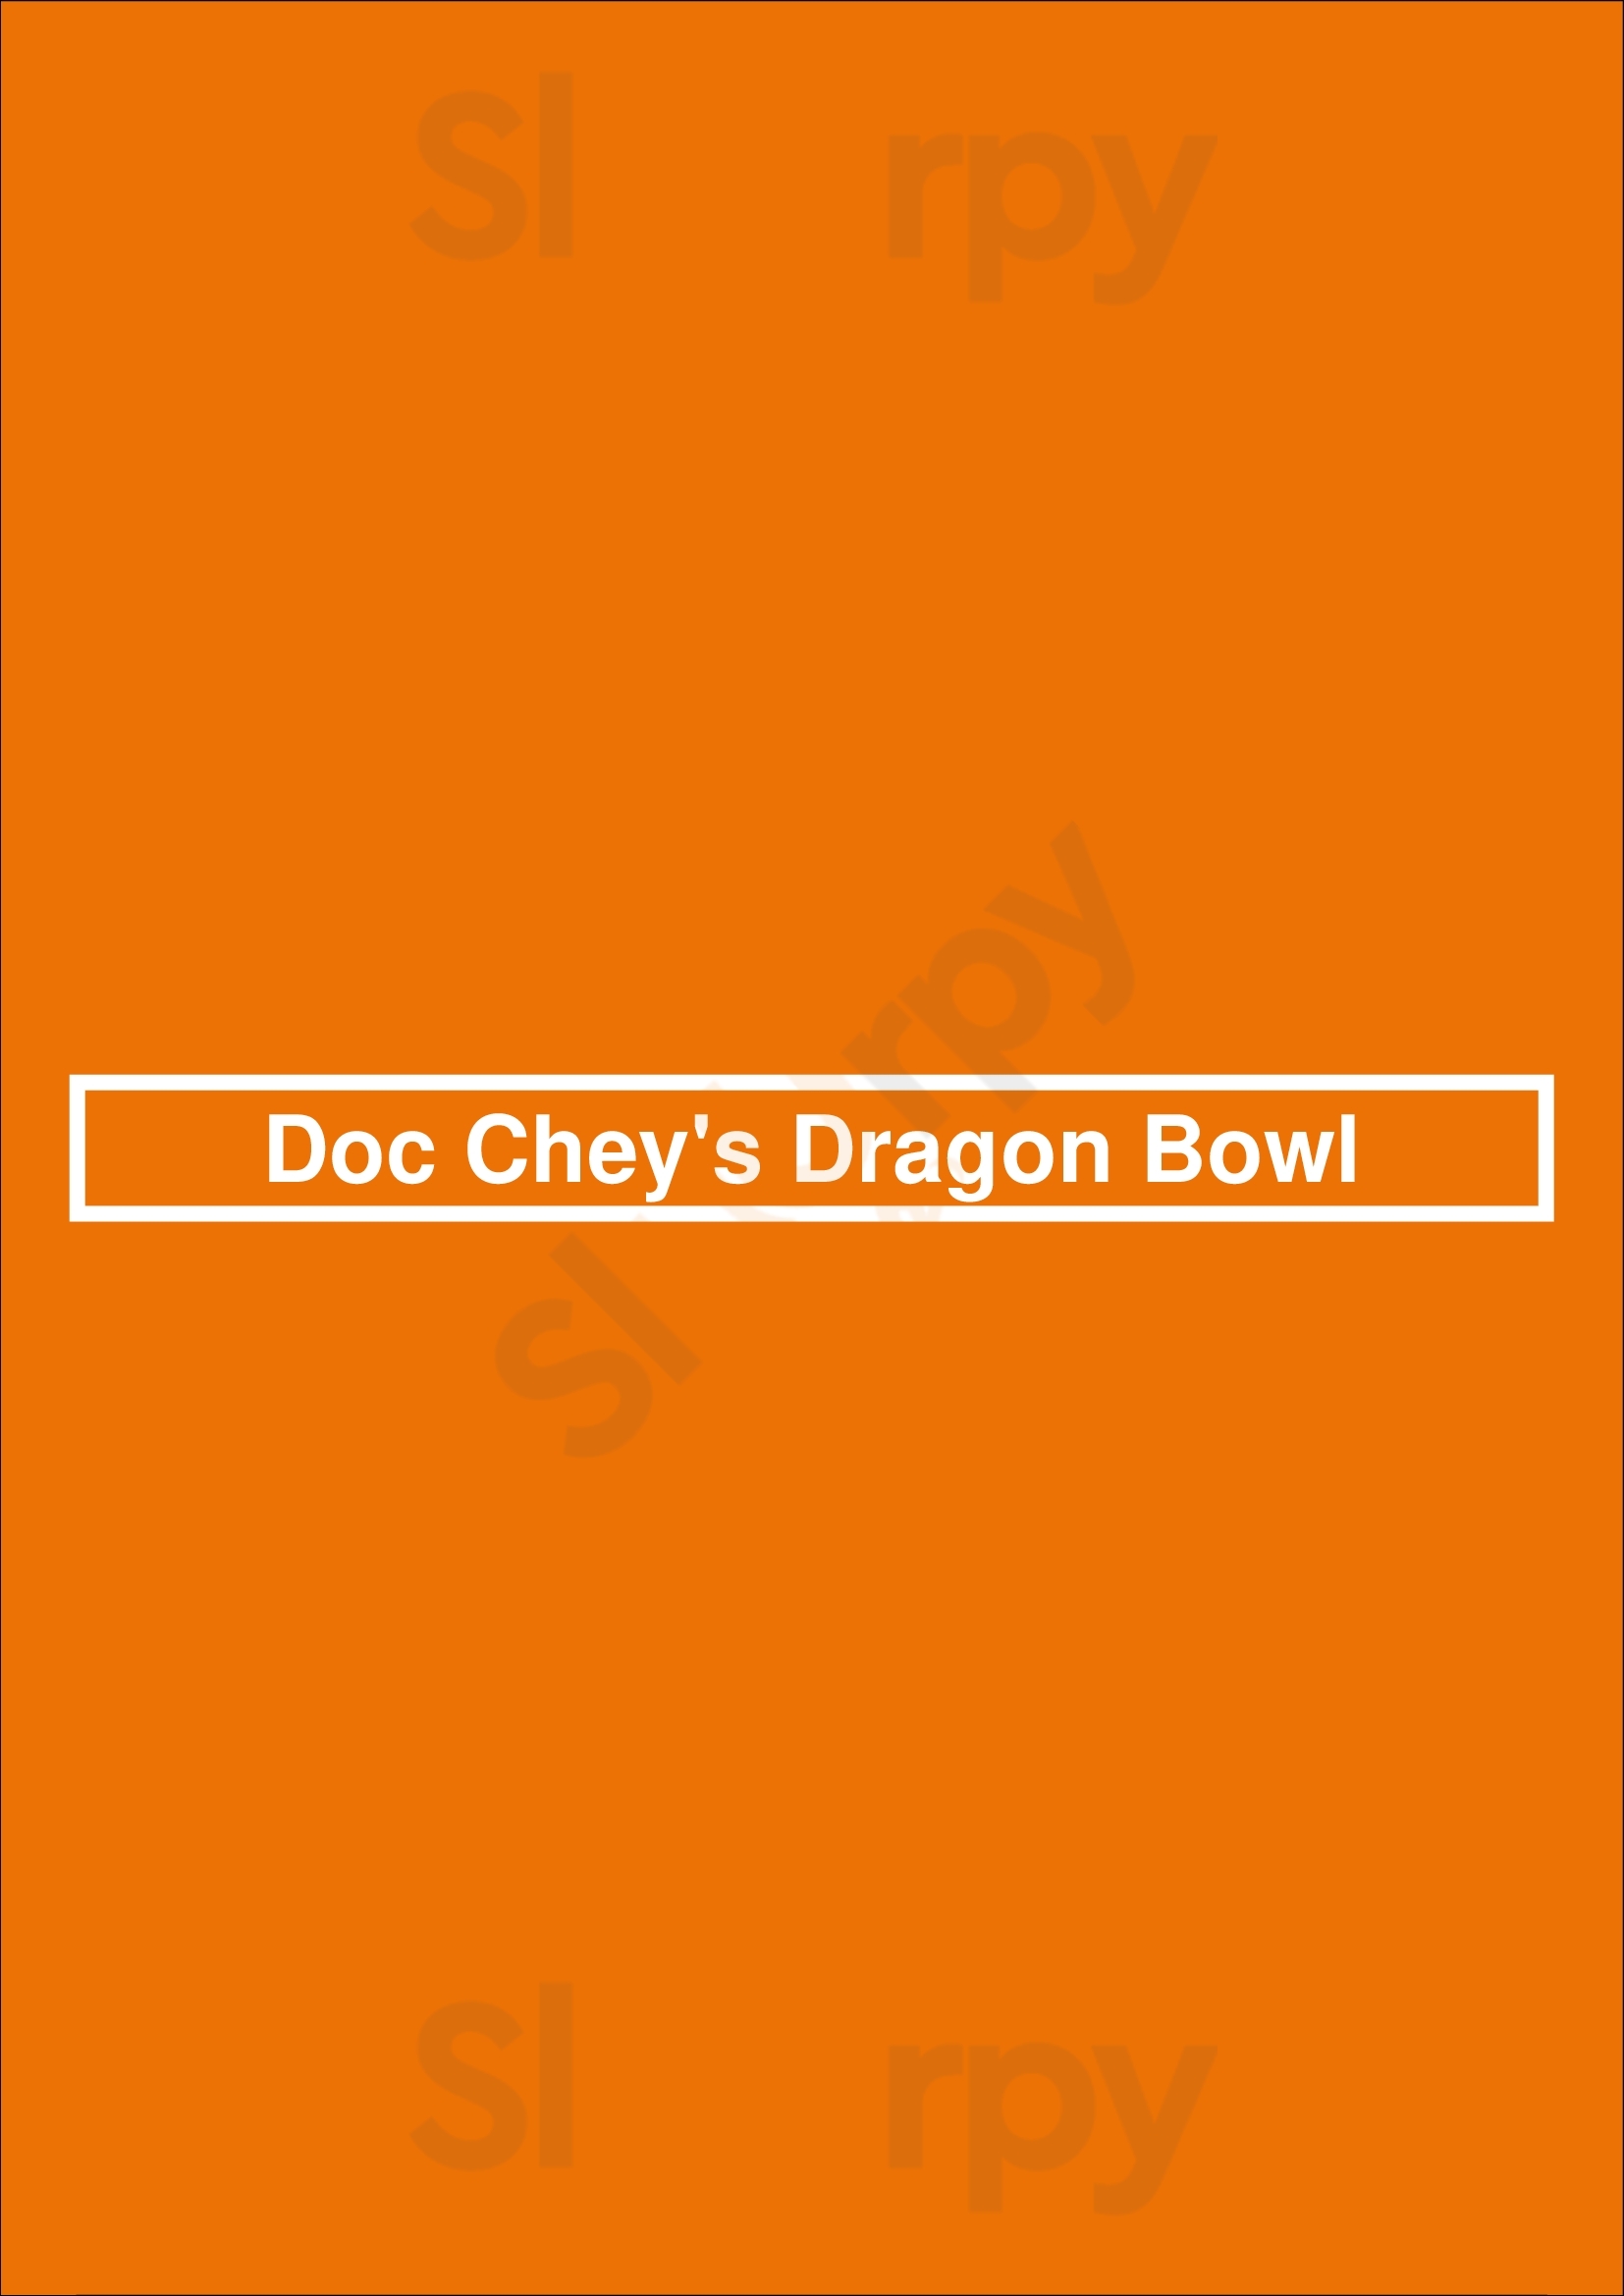 Dragon Bowl Atlanta Menu - 1